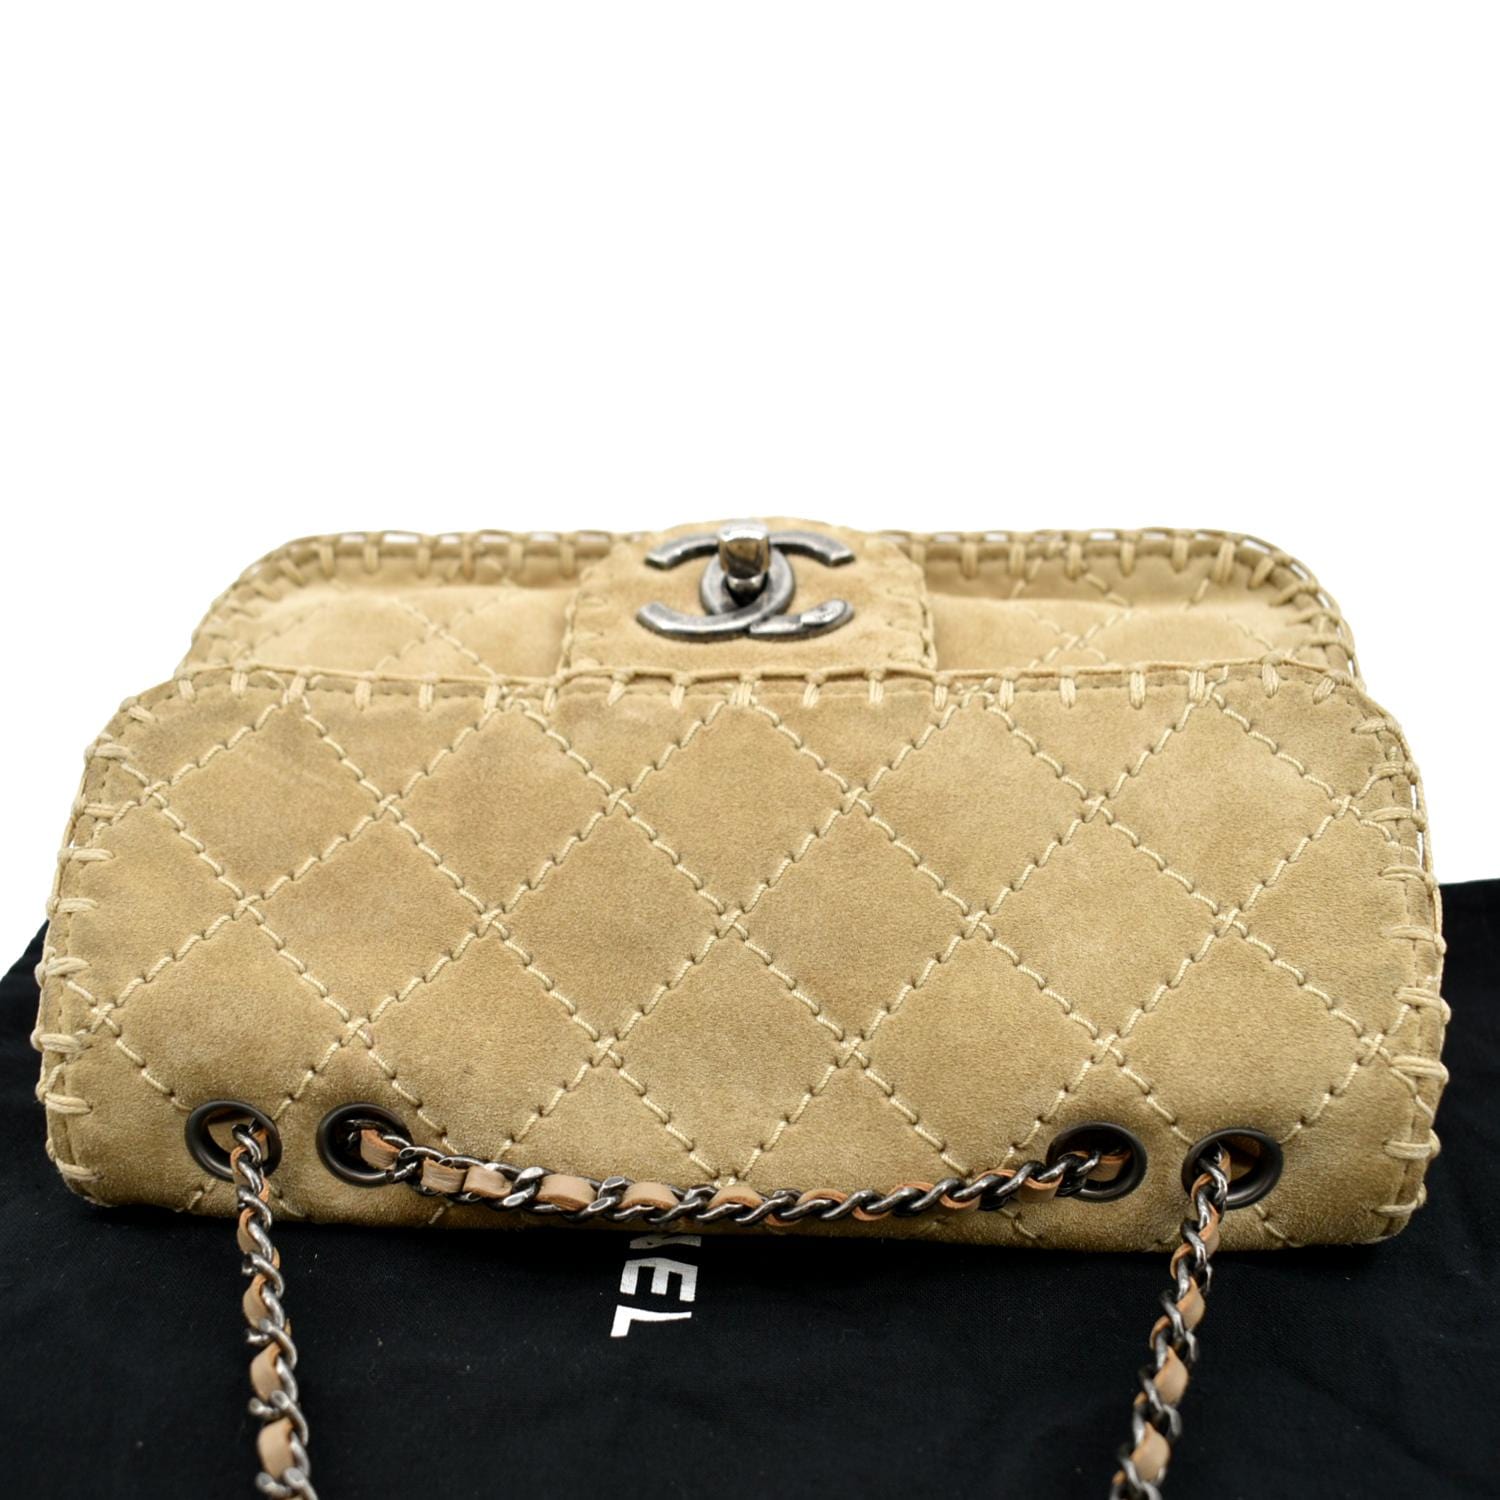 Chanel Whipstitch Small Flap Suede Shoulder Bag Beige